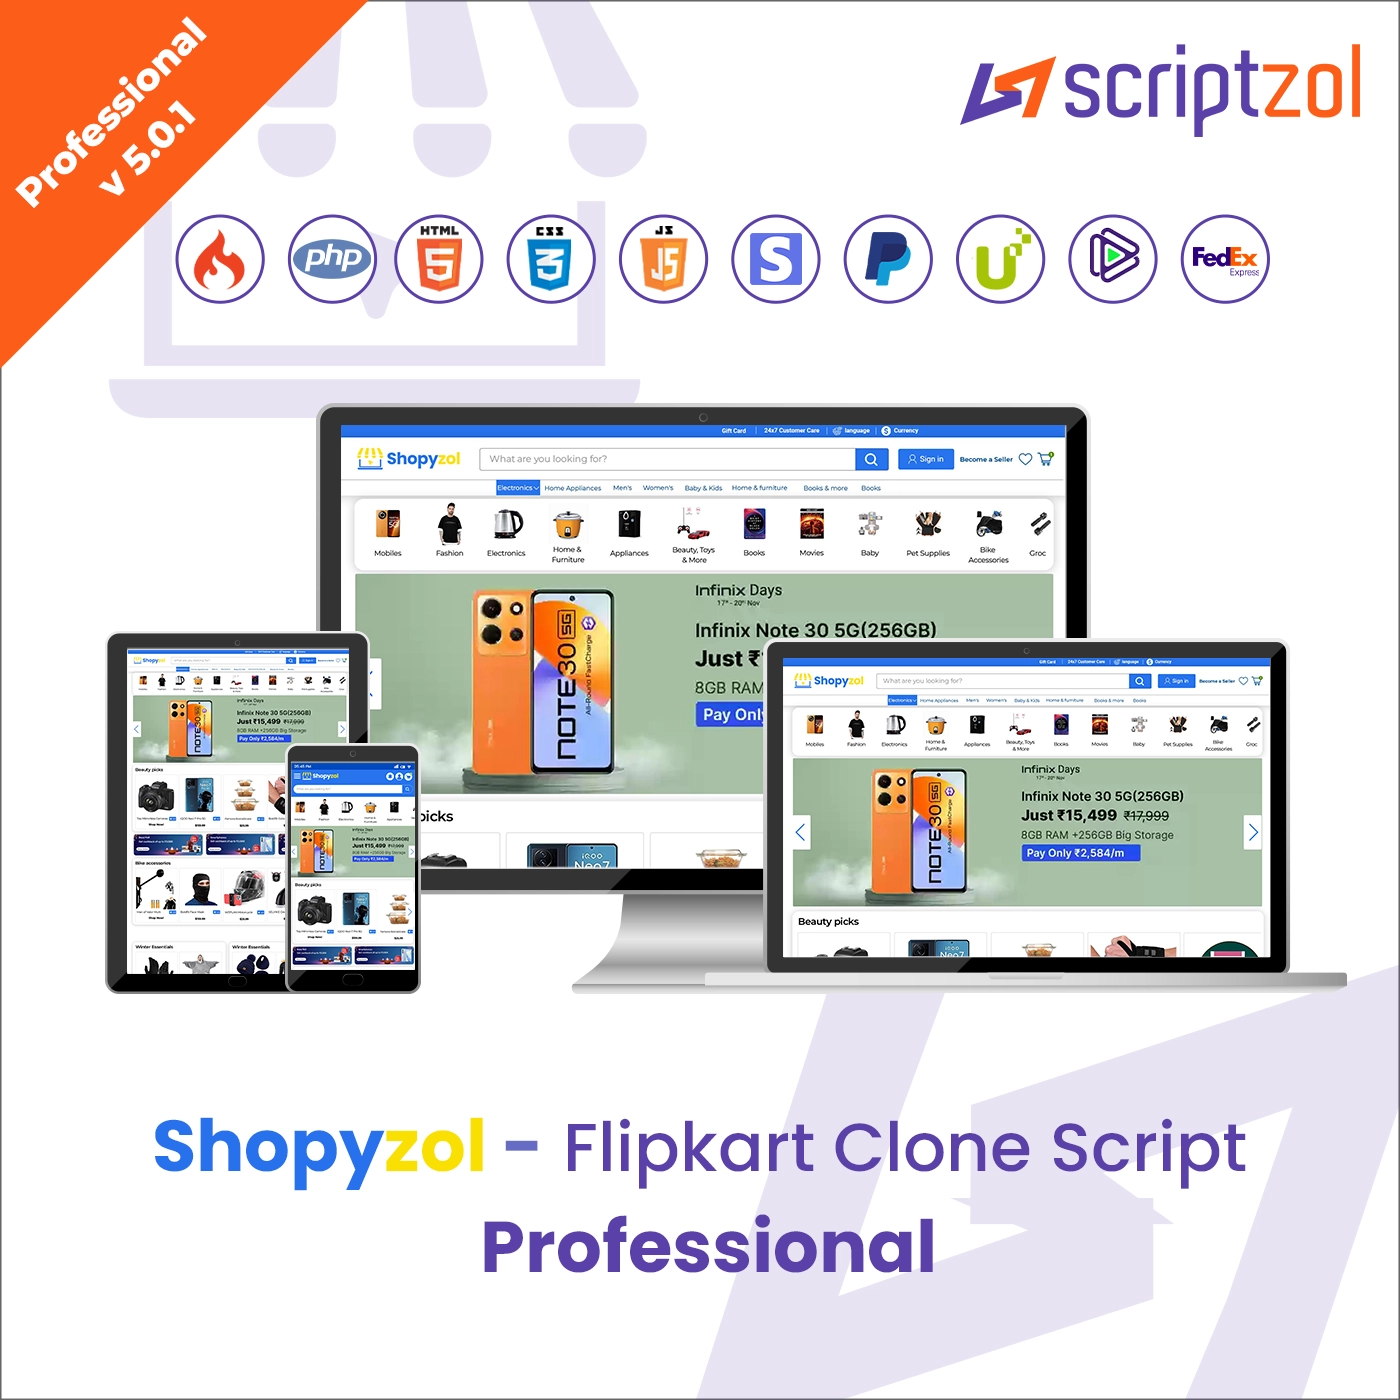 Shopyzol - Flipkart Clone Script Professional